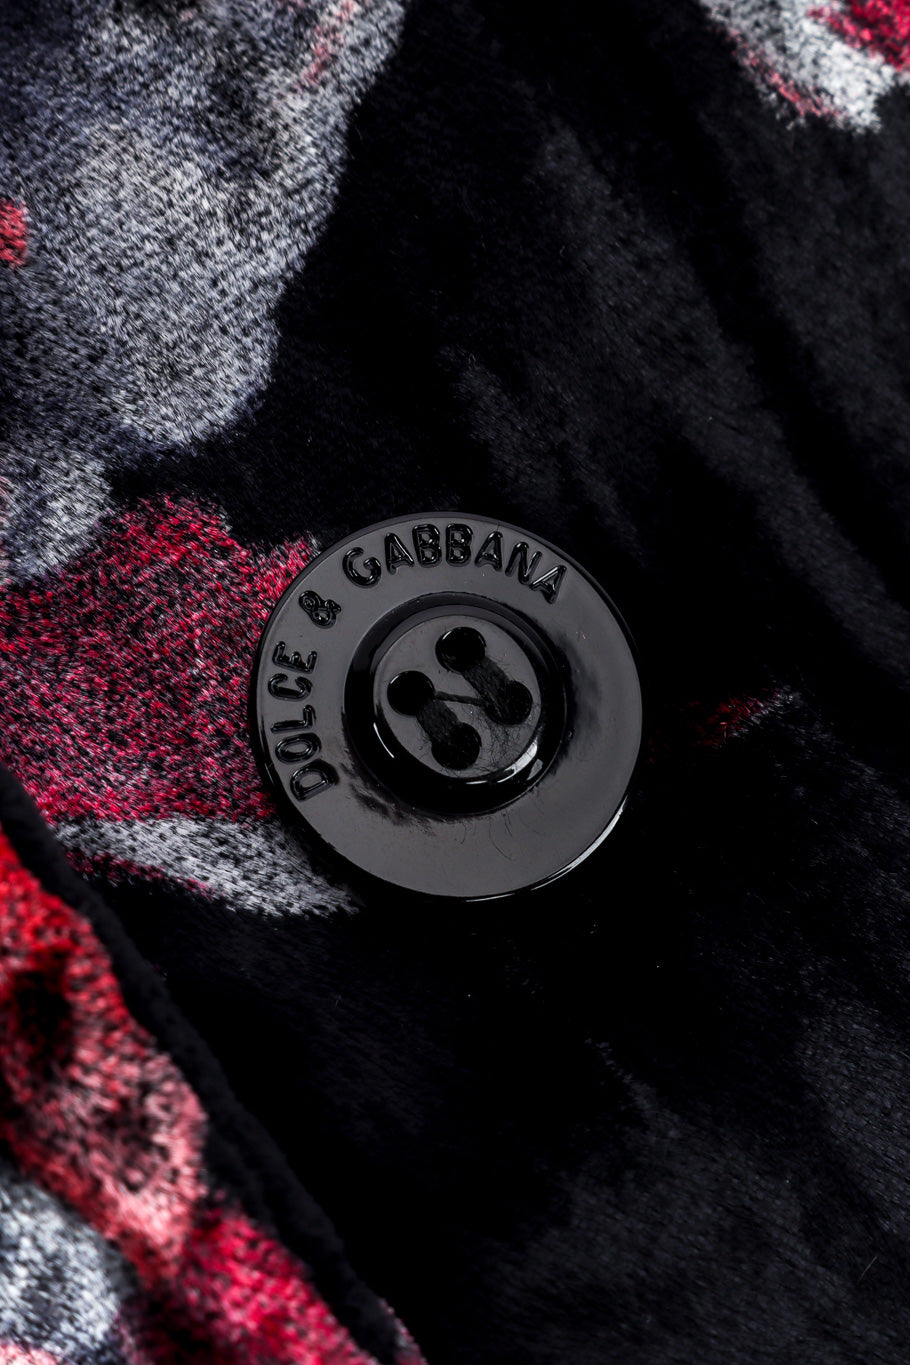 Dolce and Gabbana Floral Velvet Jacket and Pant Set button closeup @recessla